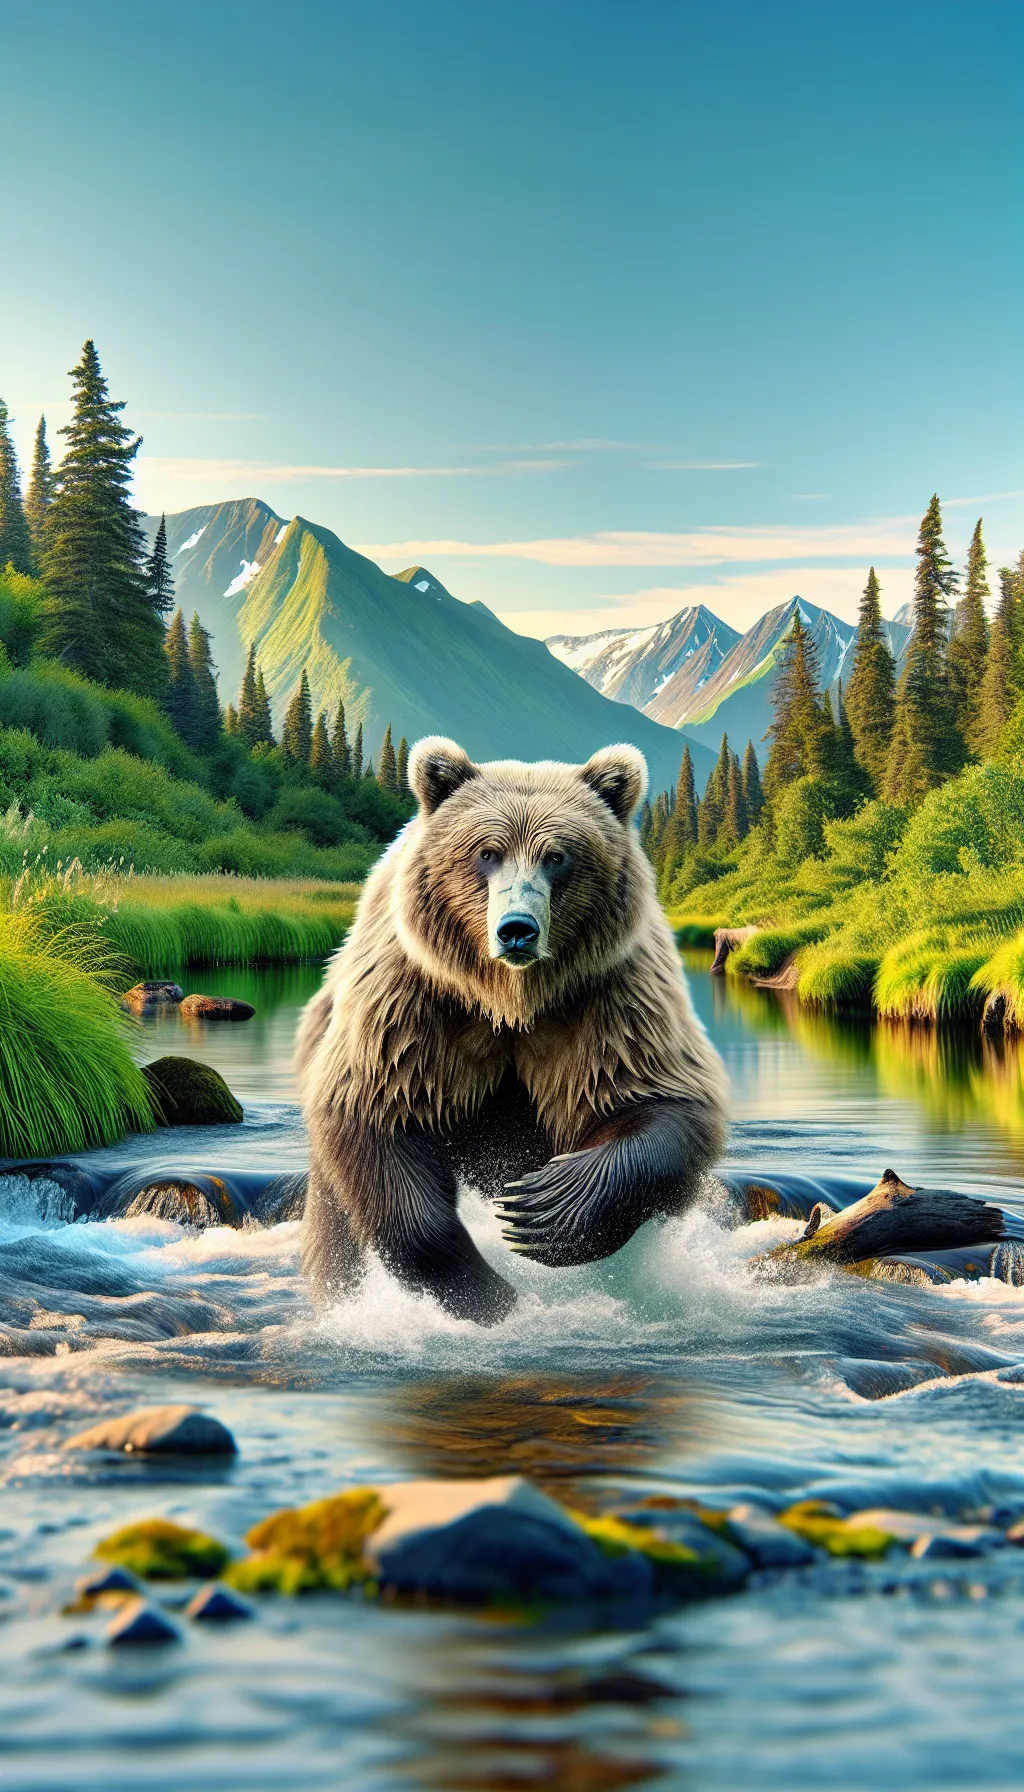 Kodiak Bear - Animal Matchup